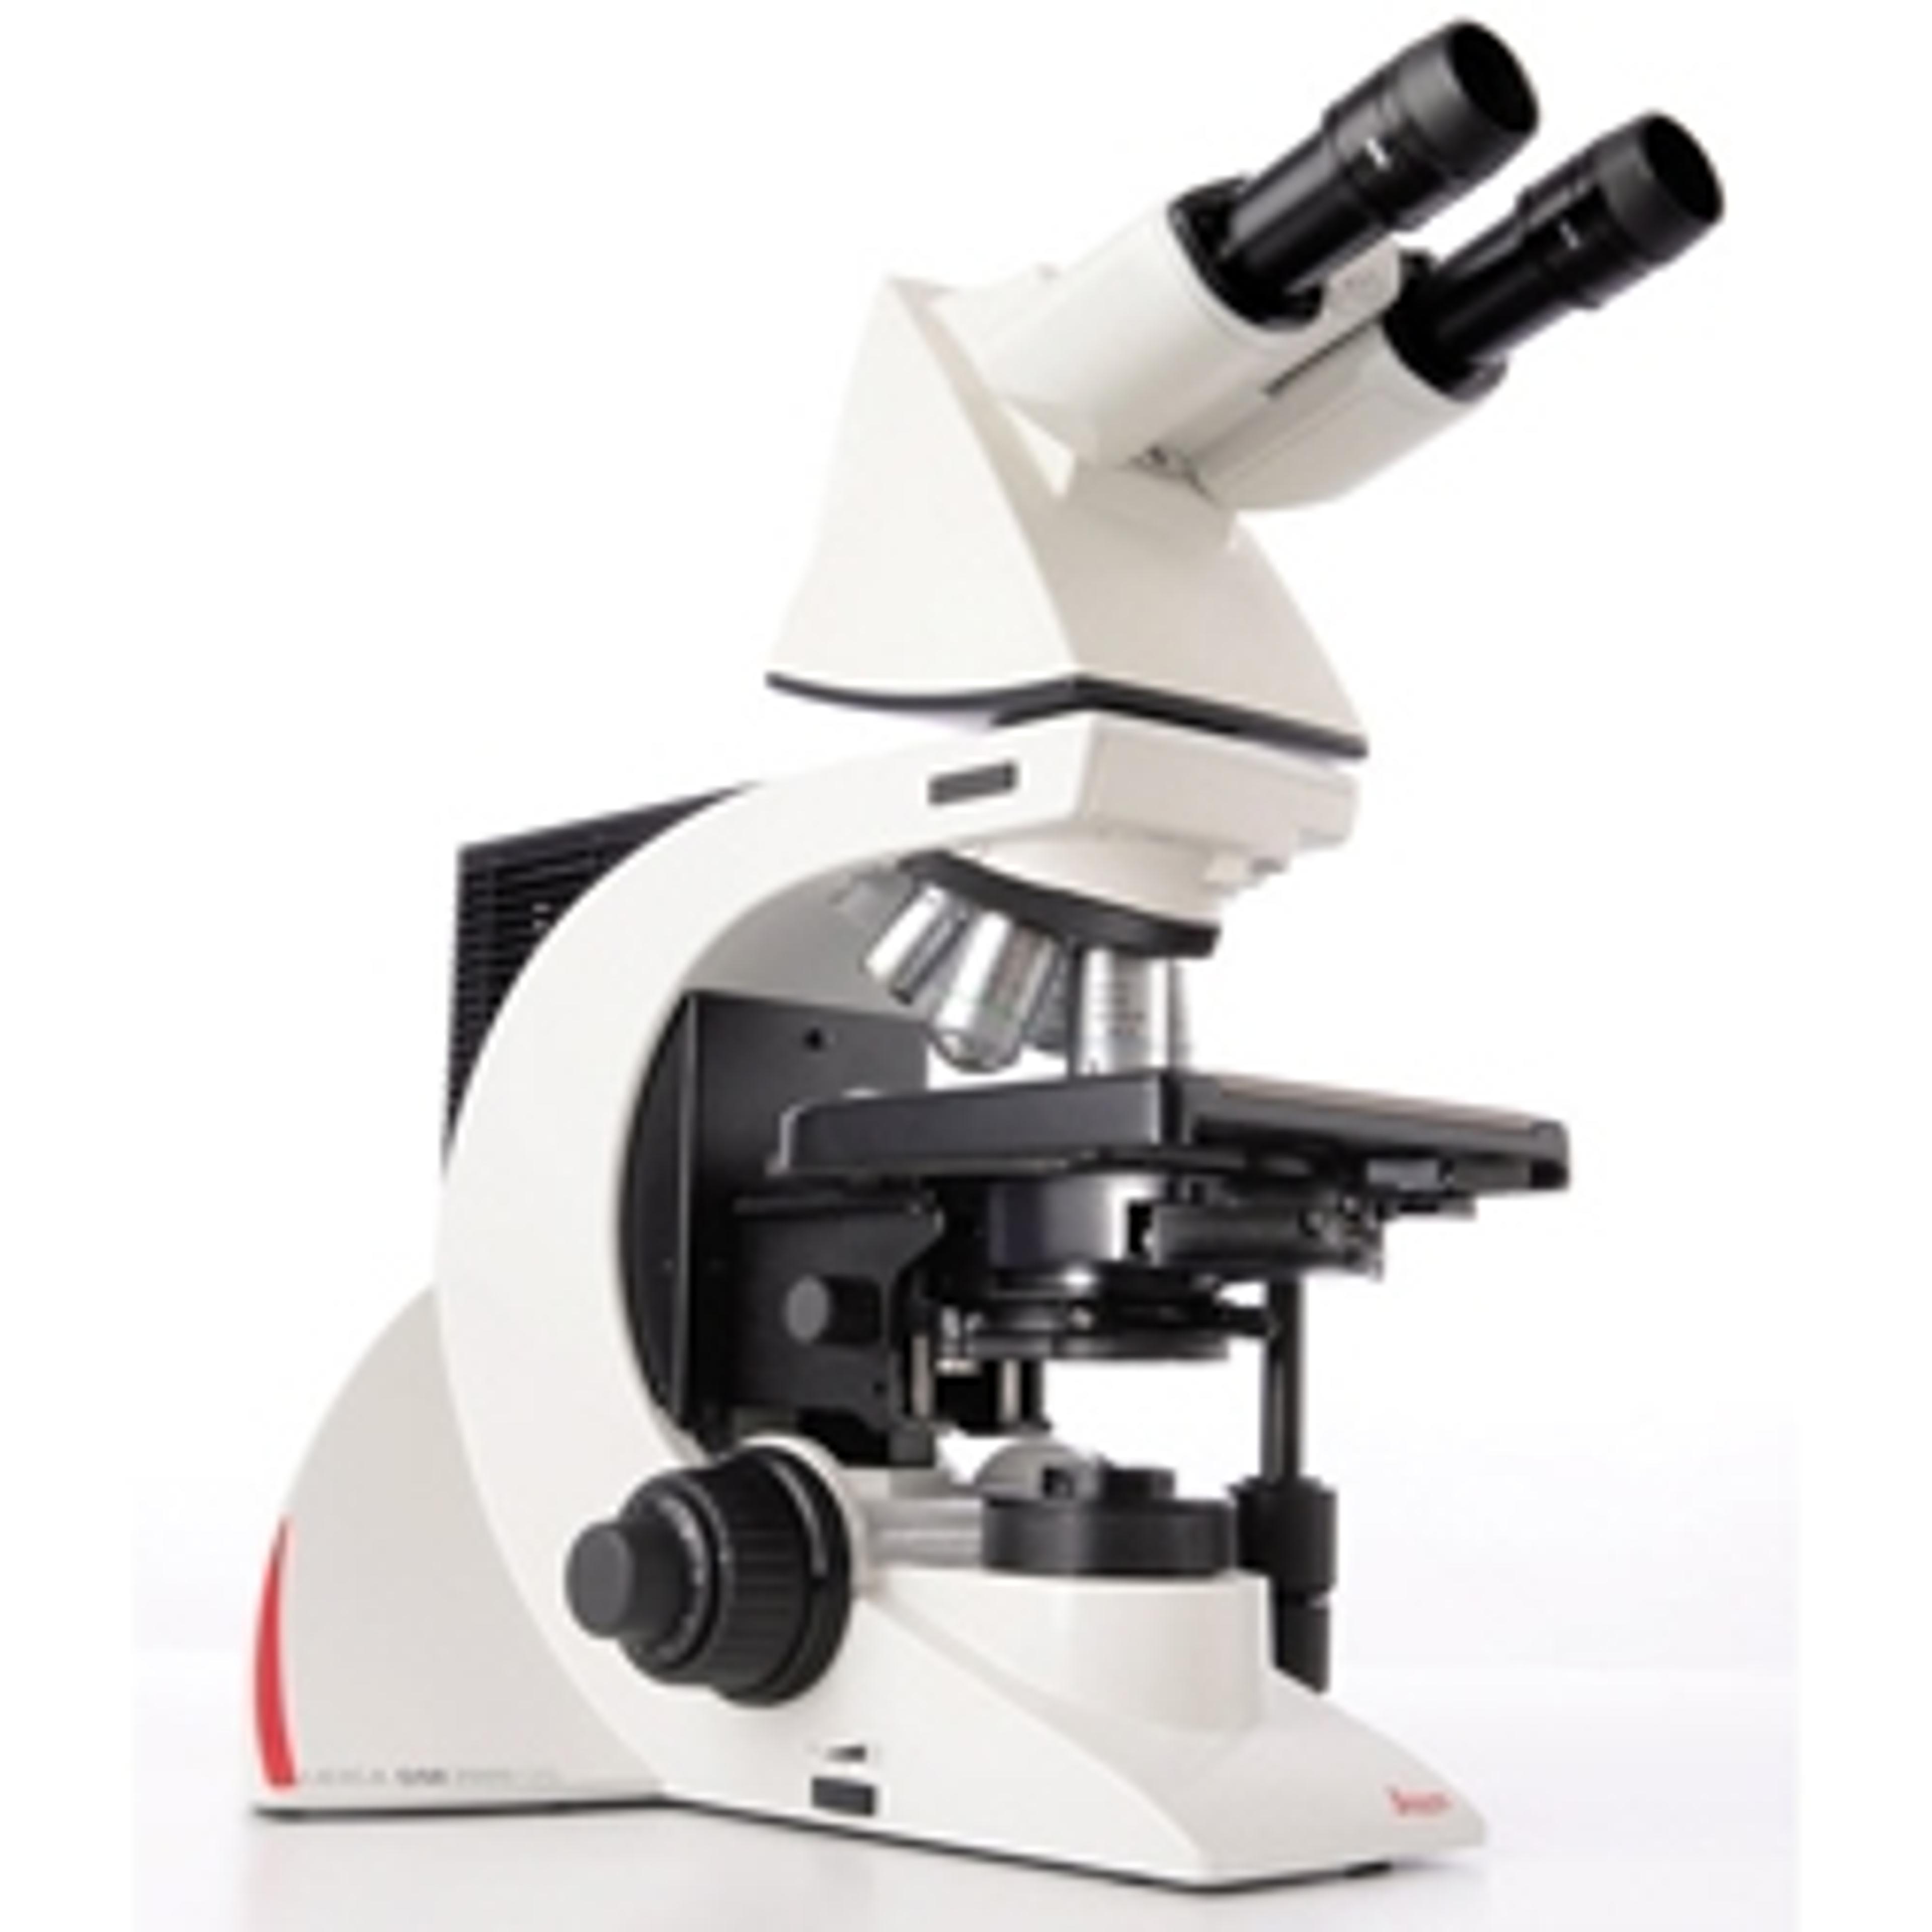 Leica DM2000 Ergonomic system microscope